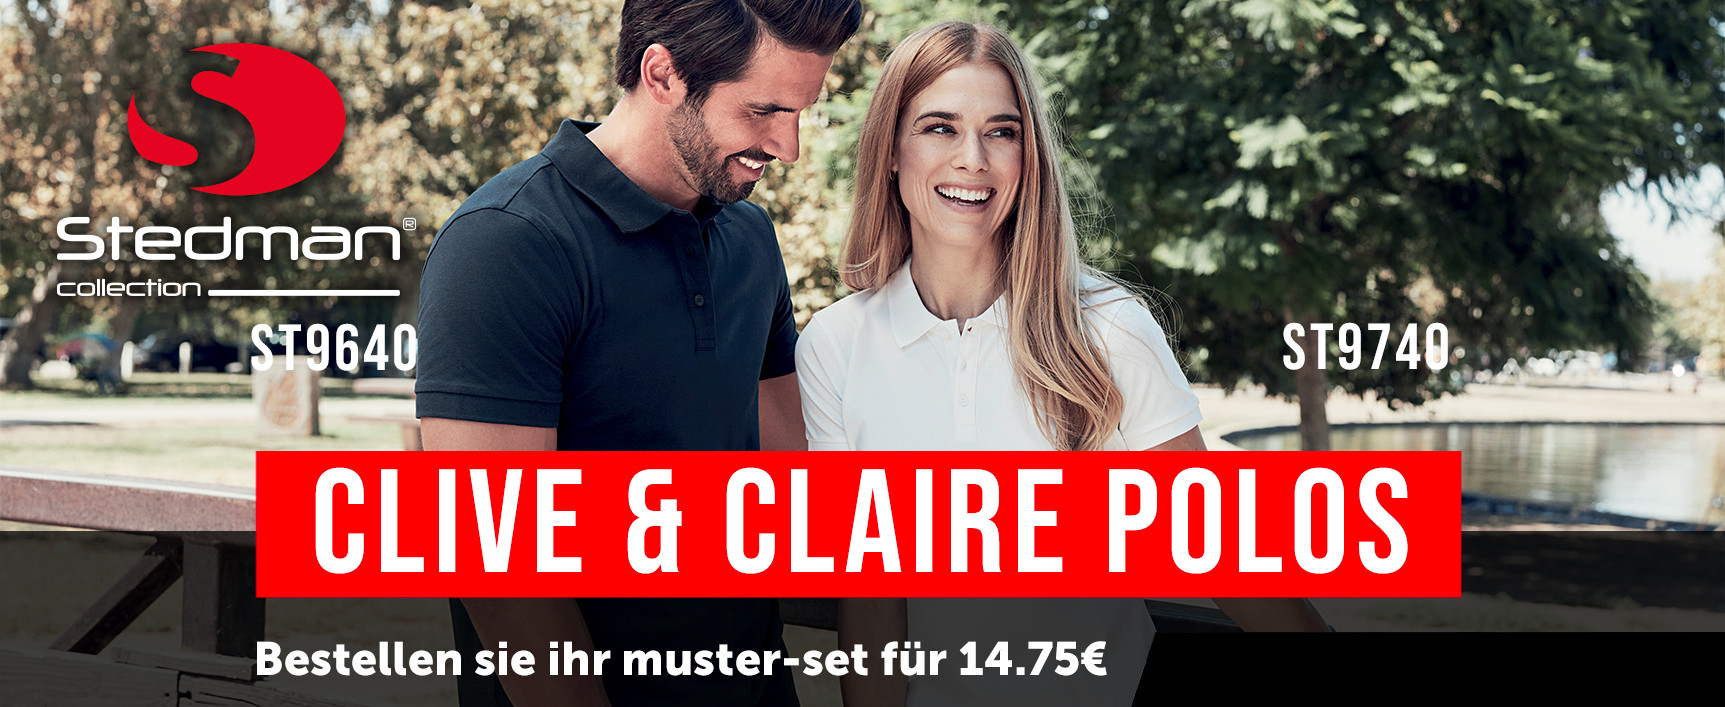 Clive & Claire - Kits